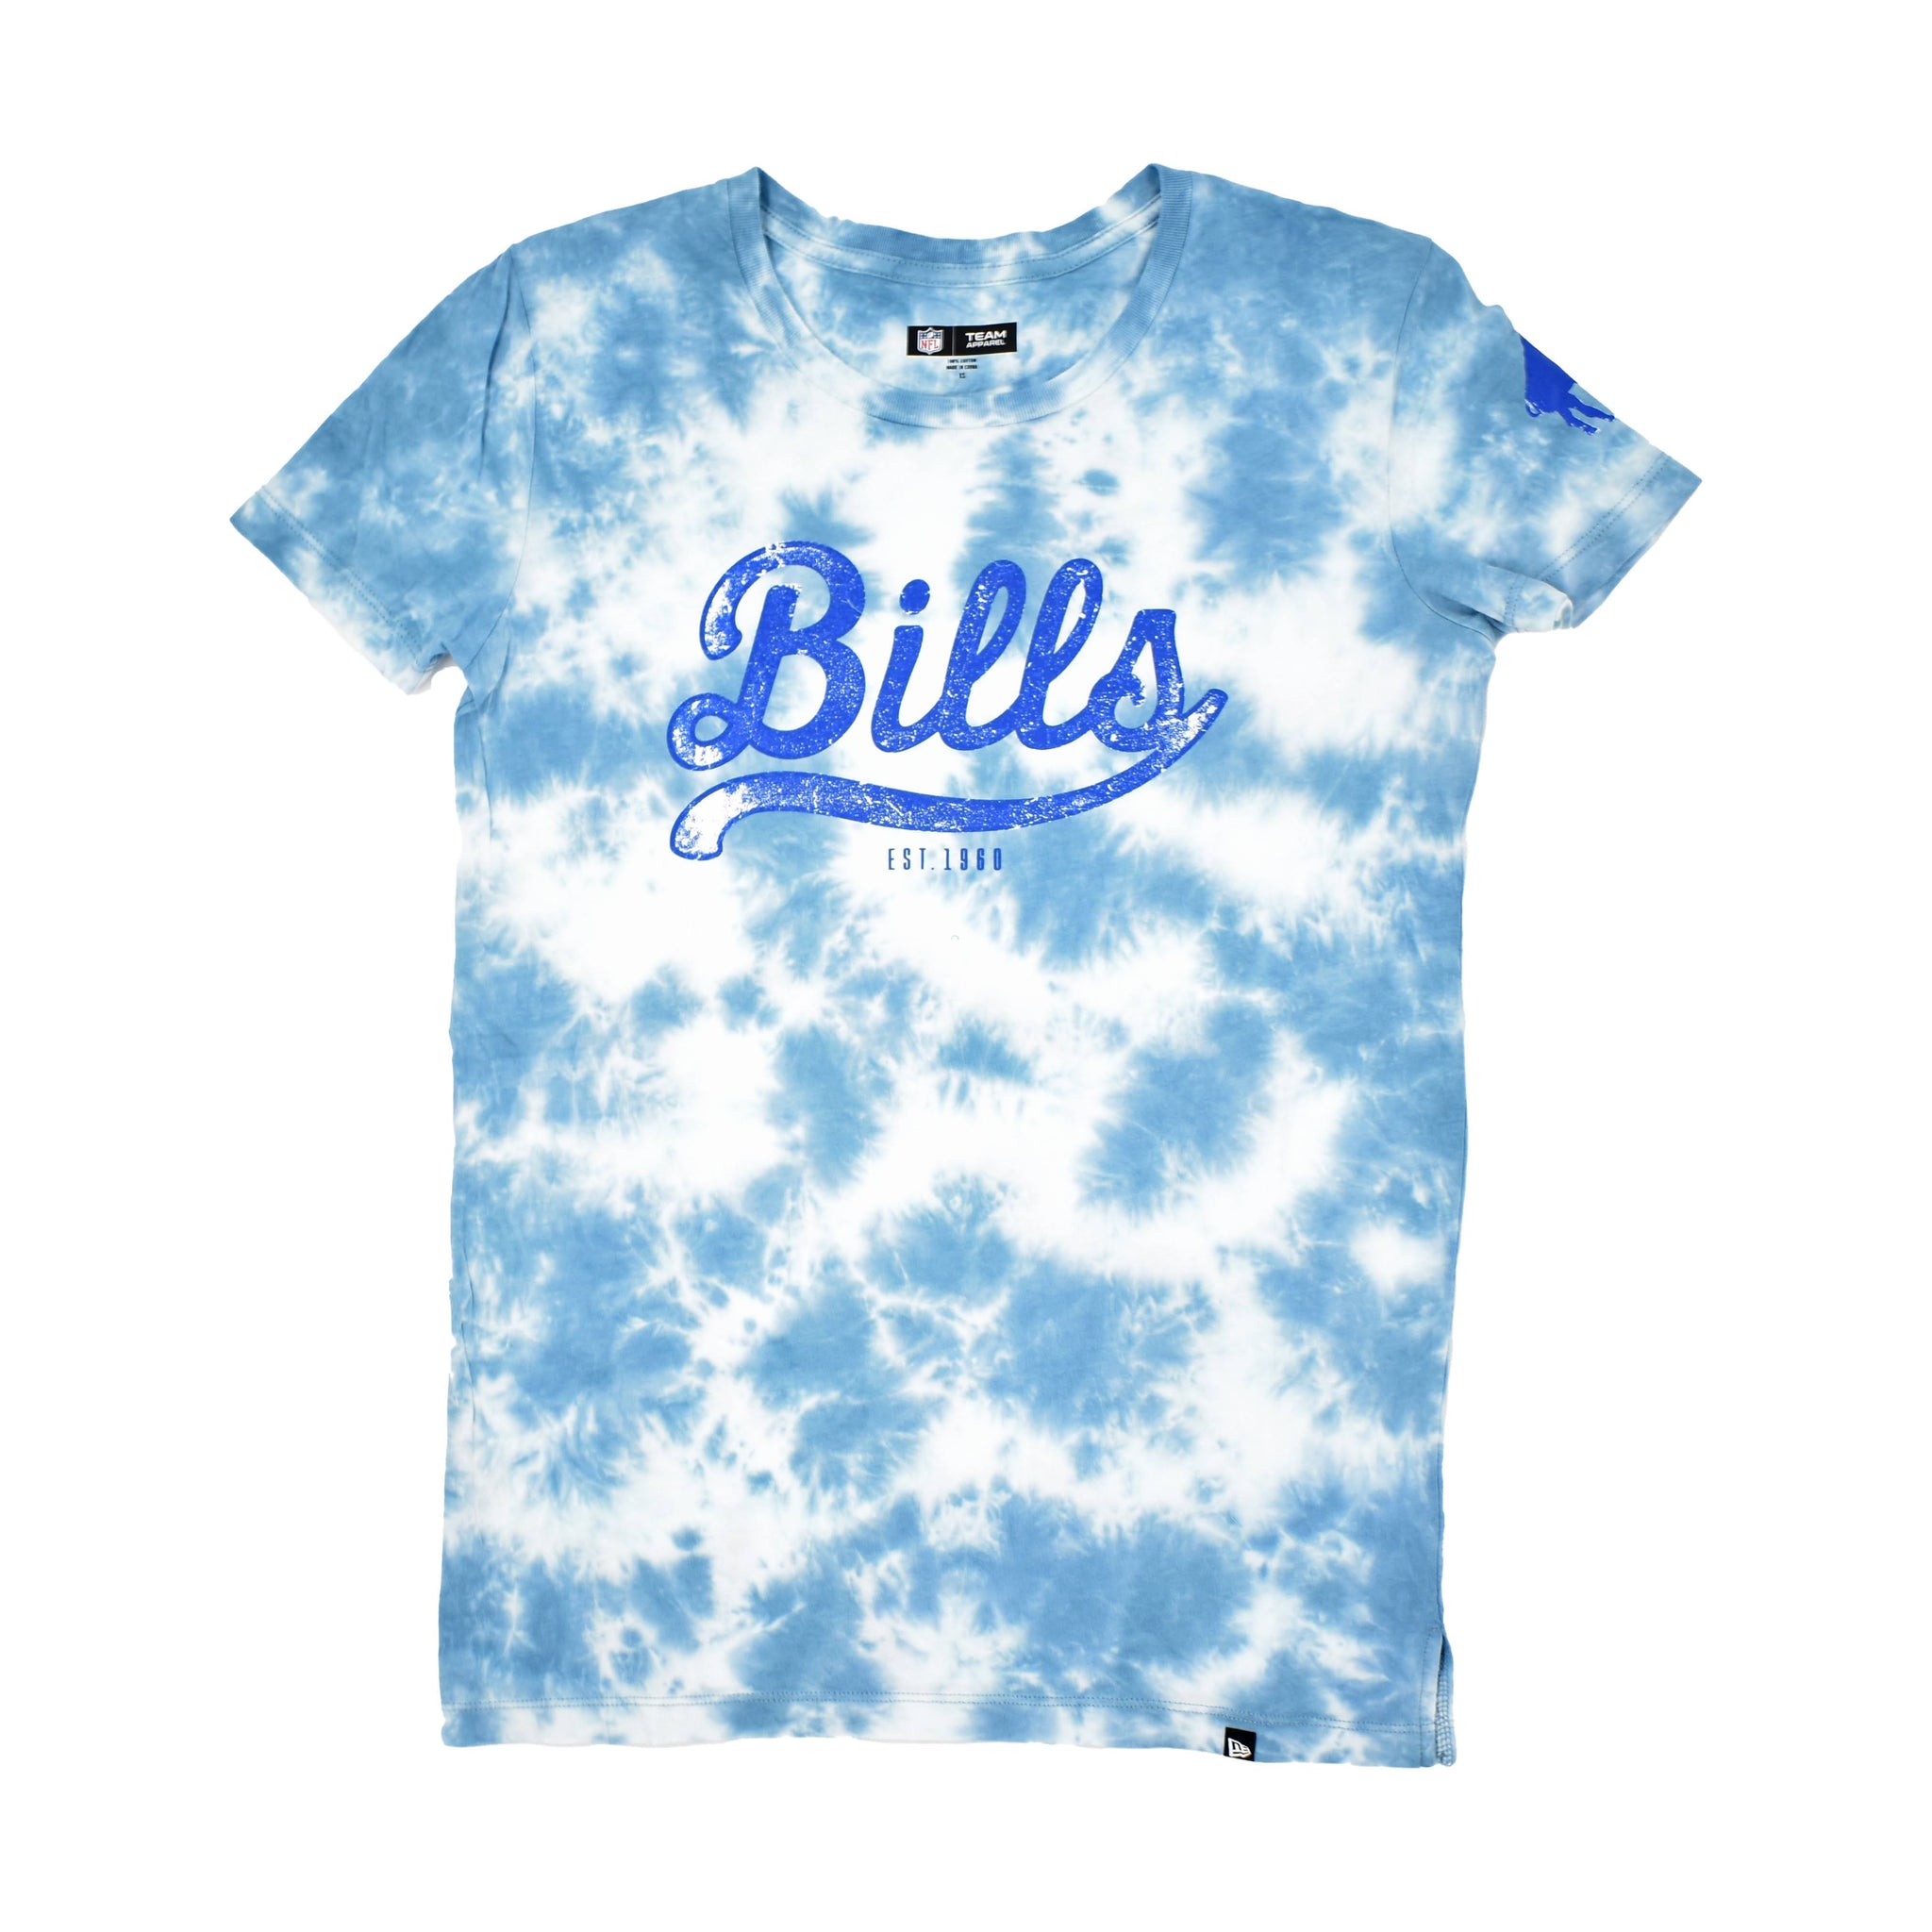 bflo store Women's New Era Buffalo Bills Light Blue Tie Dye With Standing Buffalo Short Sleeve Shirt